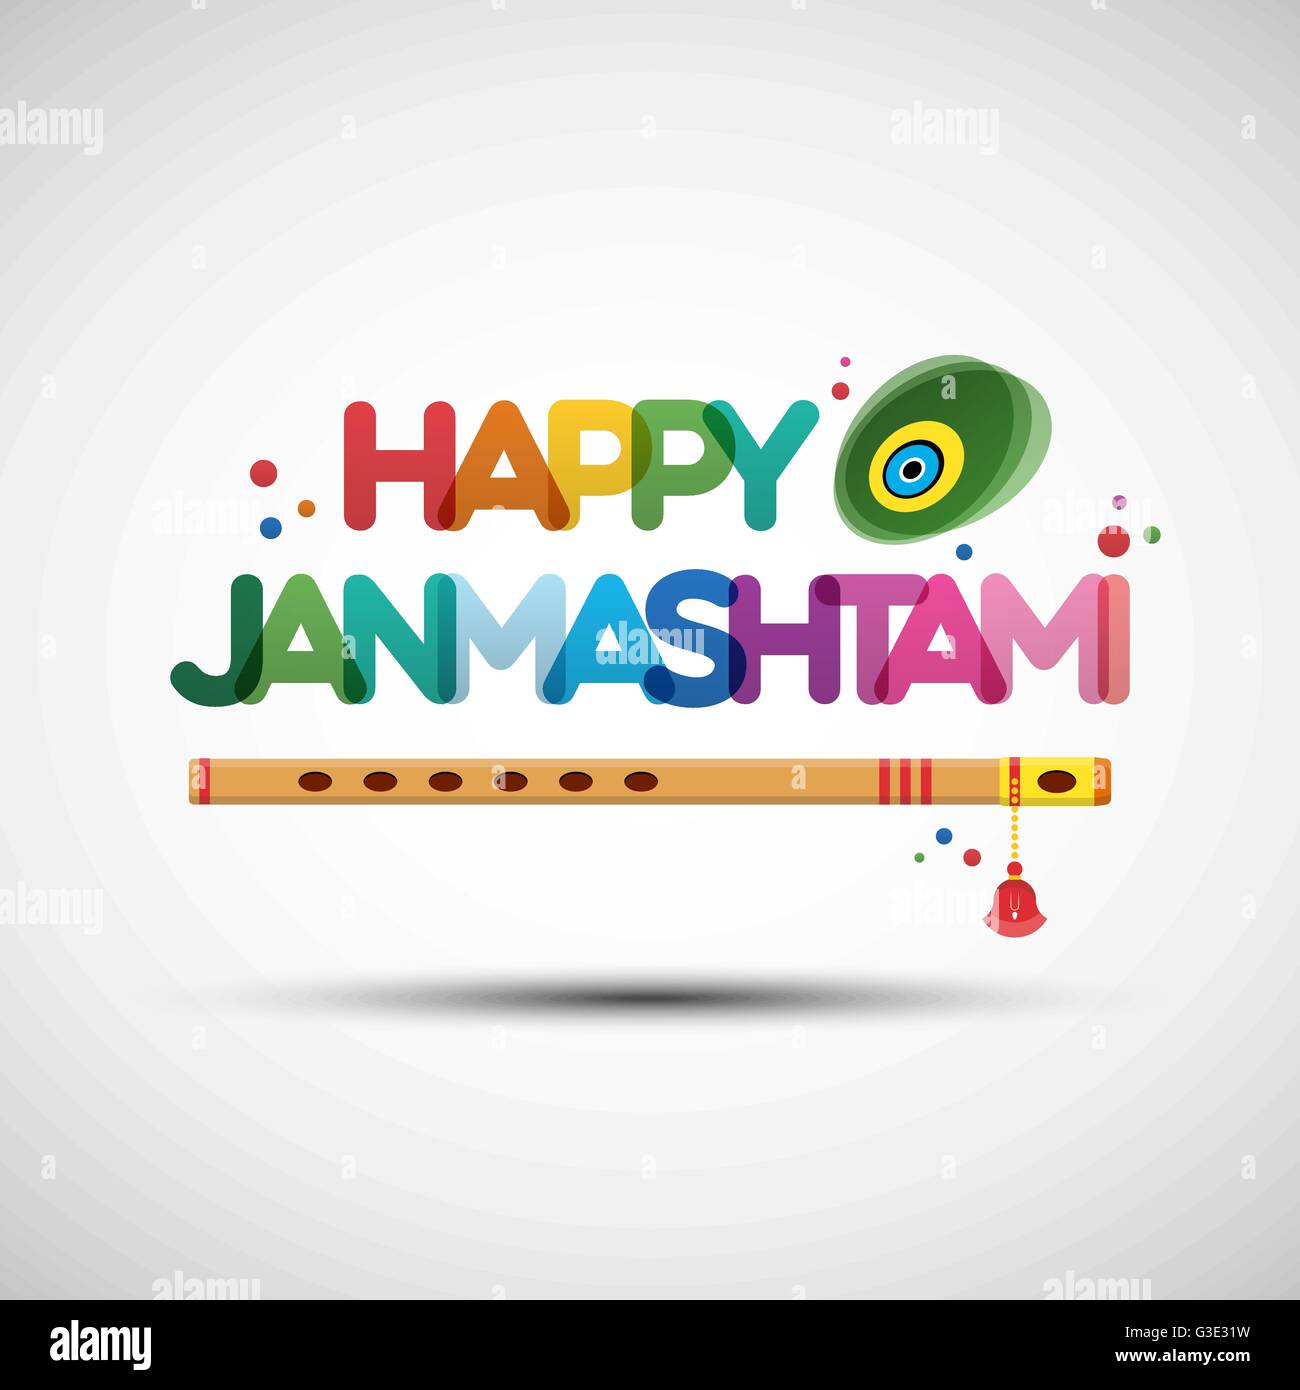 Vektor-Illustration von Krishna Janmashtami. Grußkarte Design mit kreativen bunten transparenten Text Happy Janmashtami Stock Vektor